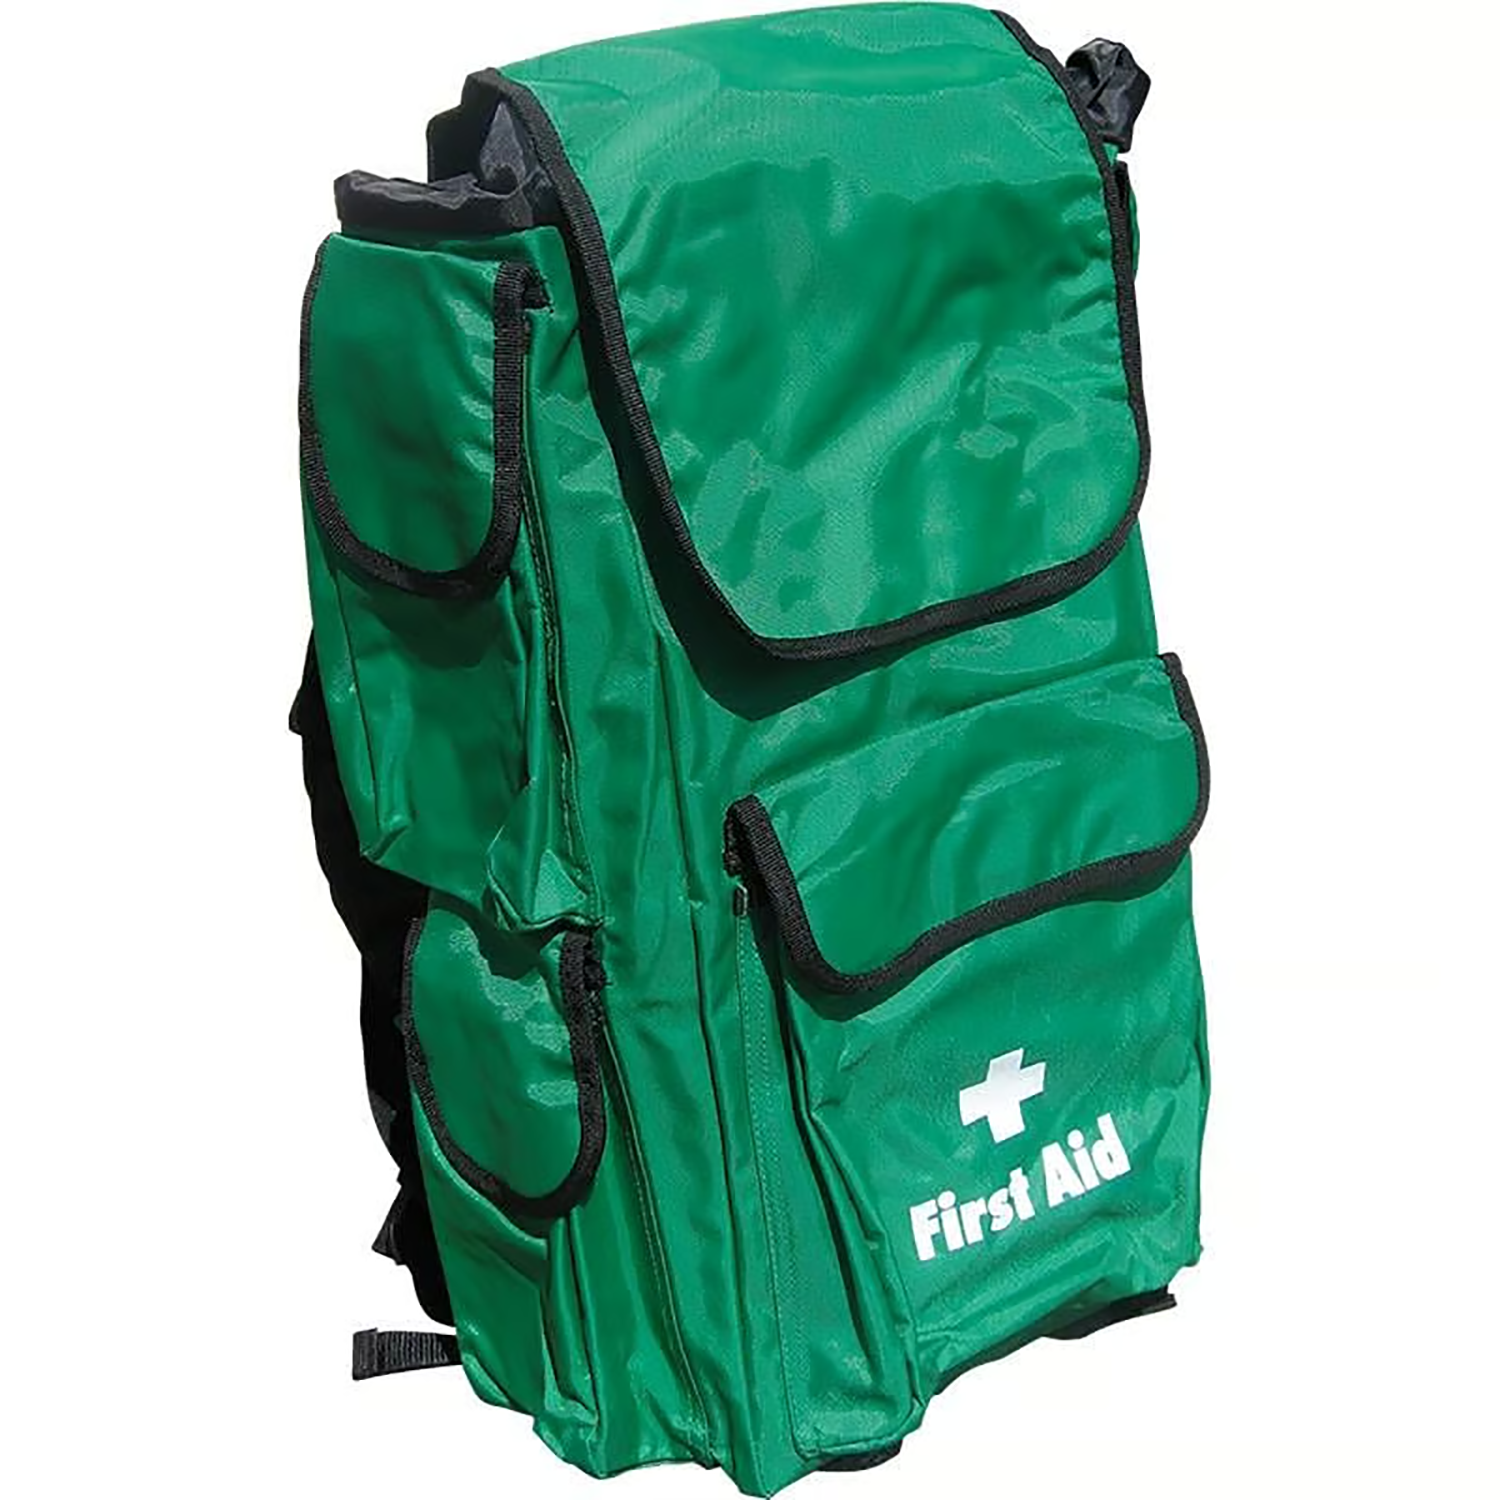 First Aid Rucksack | Green |  Empty Bag | Single